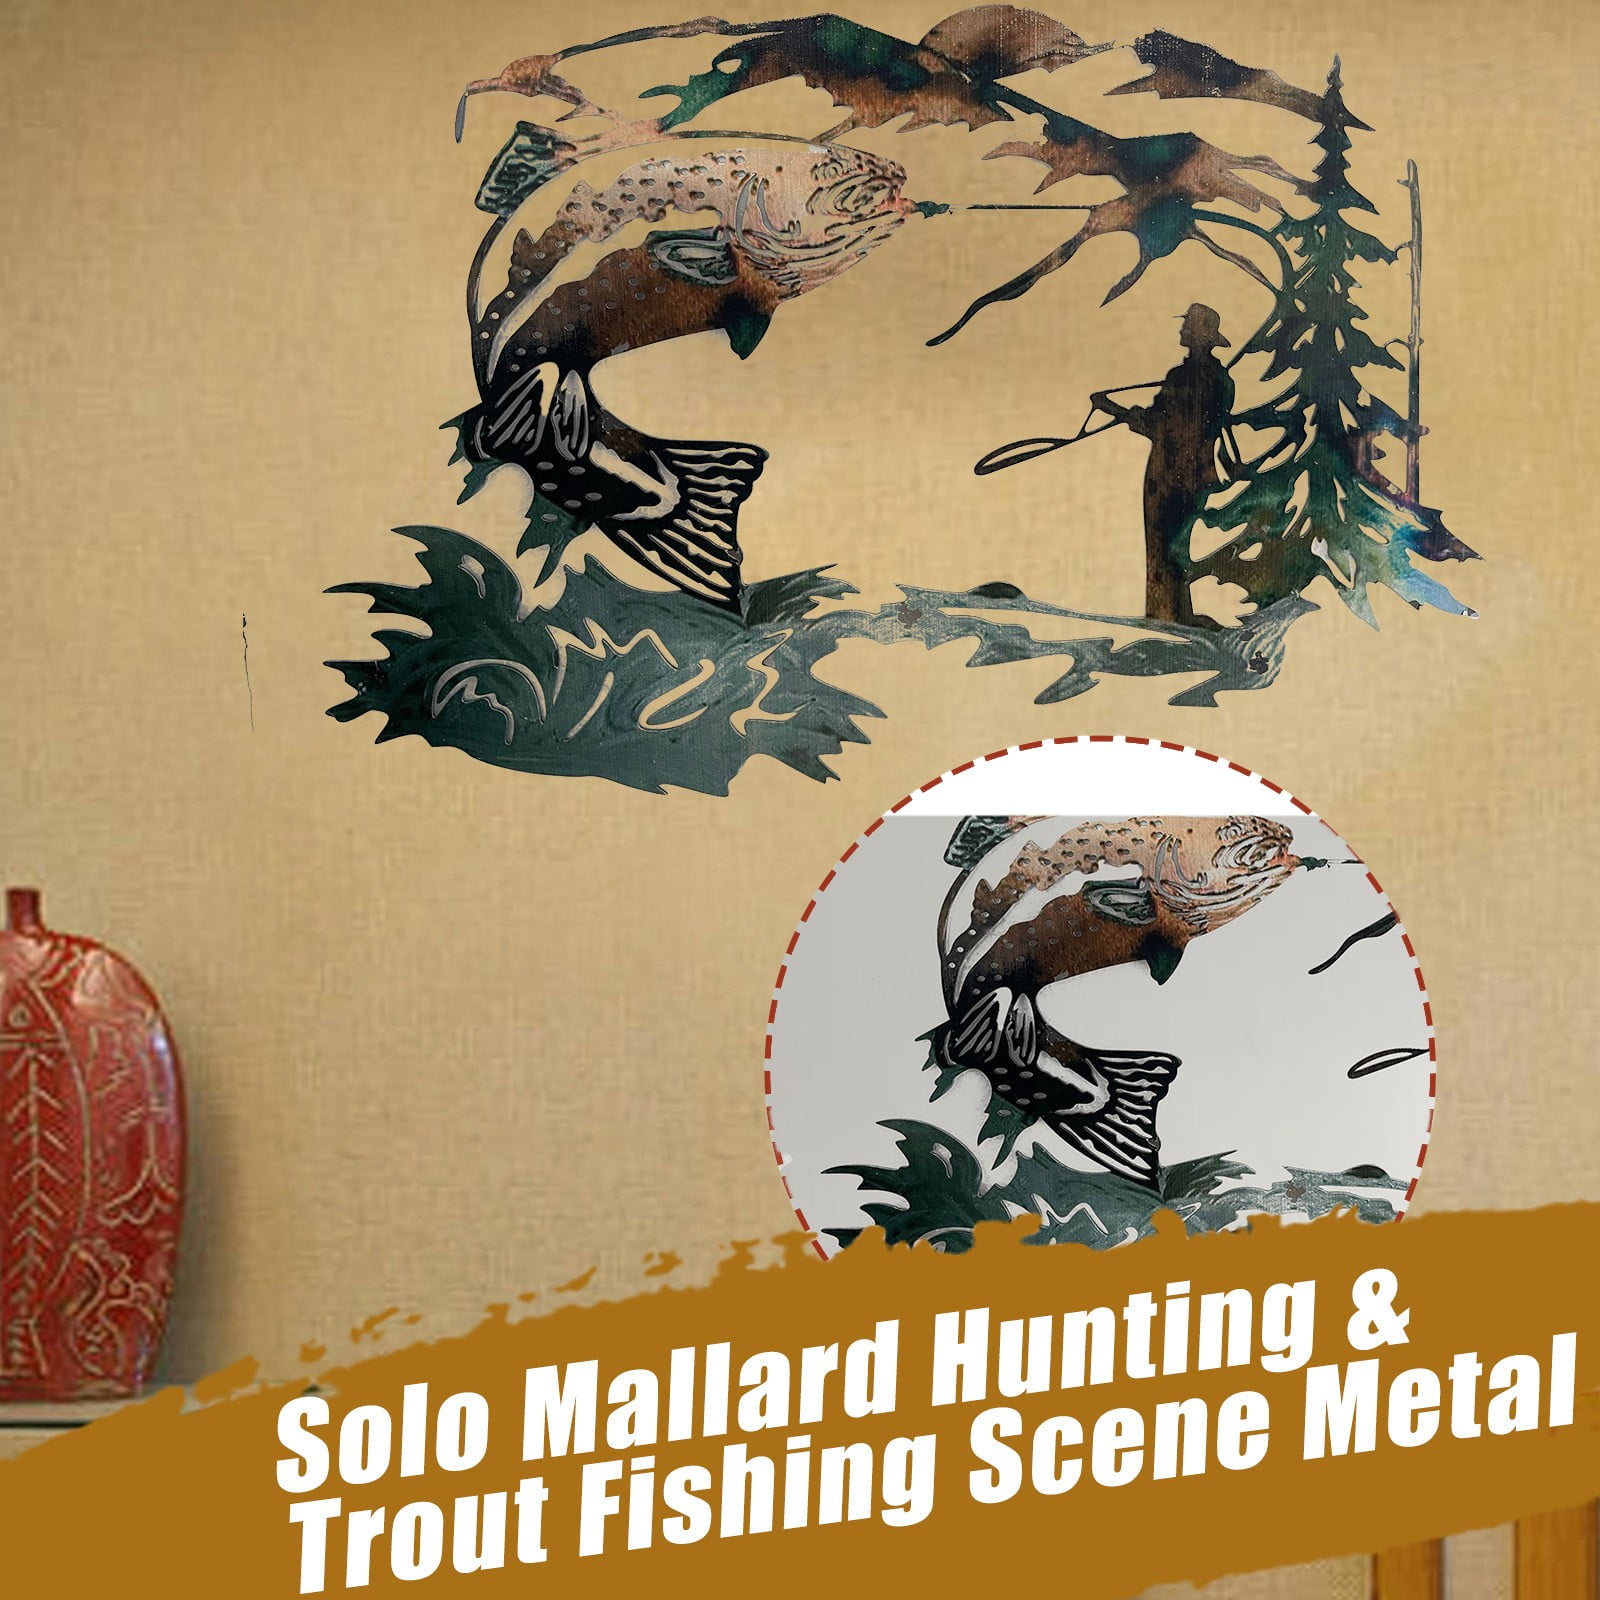 TUTUnaumb New Hot on Sale Hunting & Trout Fishing Scene Metal Wall Art-M 